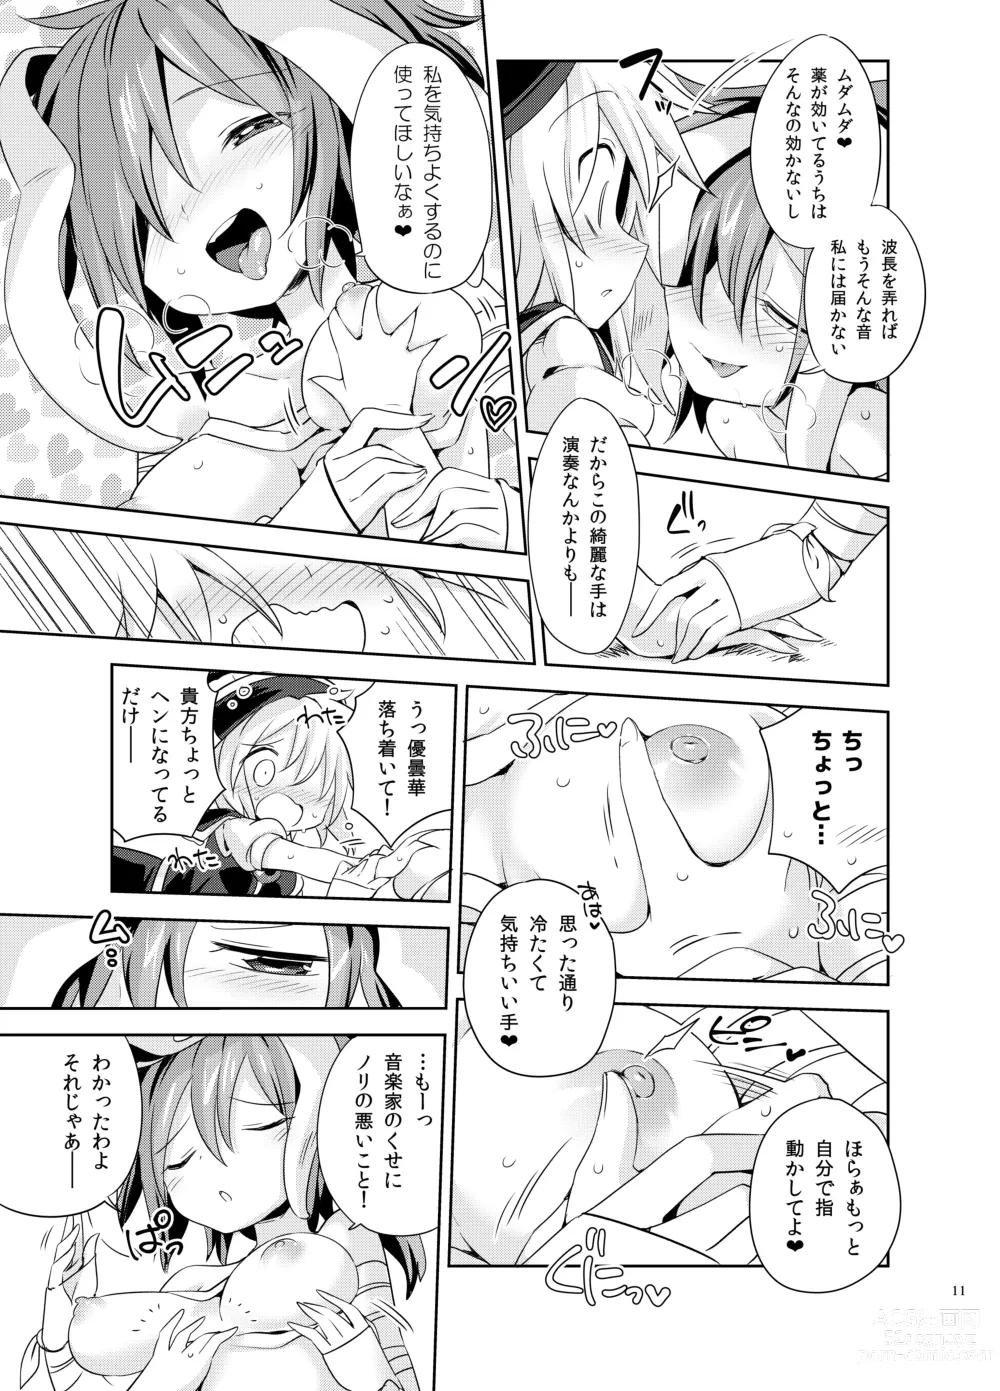 Page 10 of doujinshi Kougou Estro Tuning